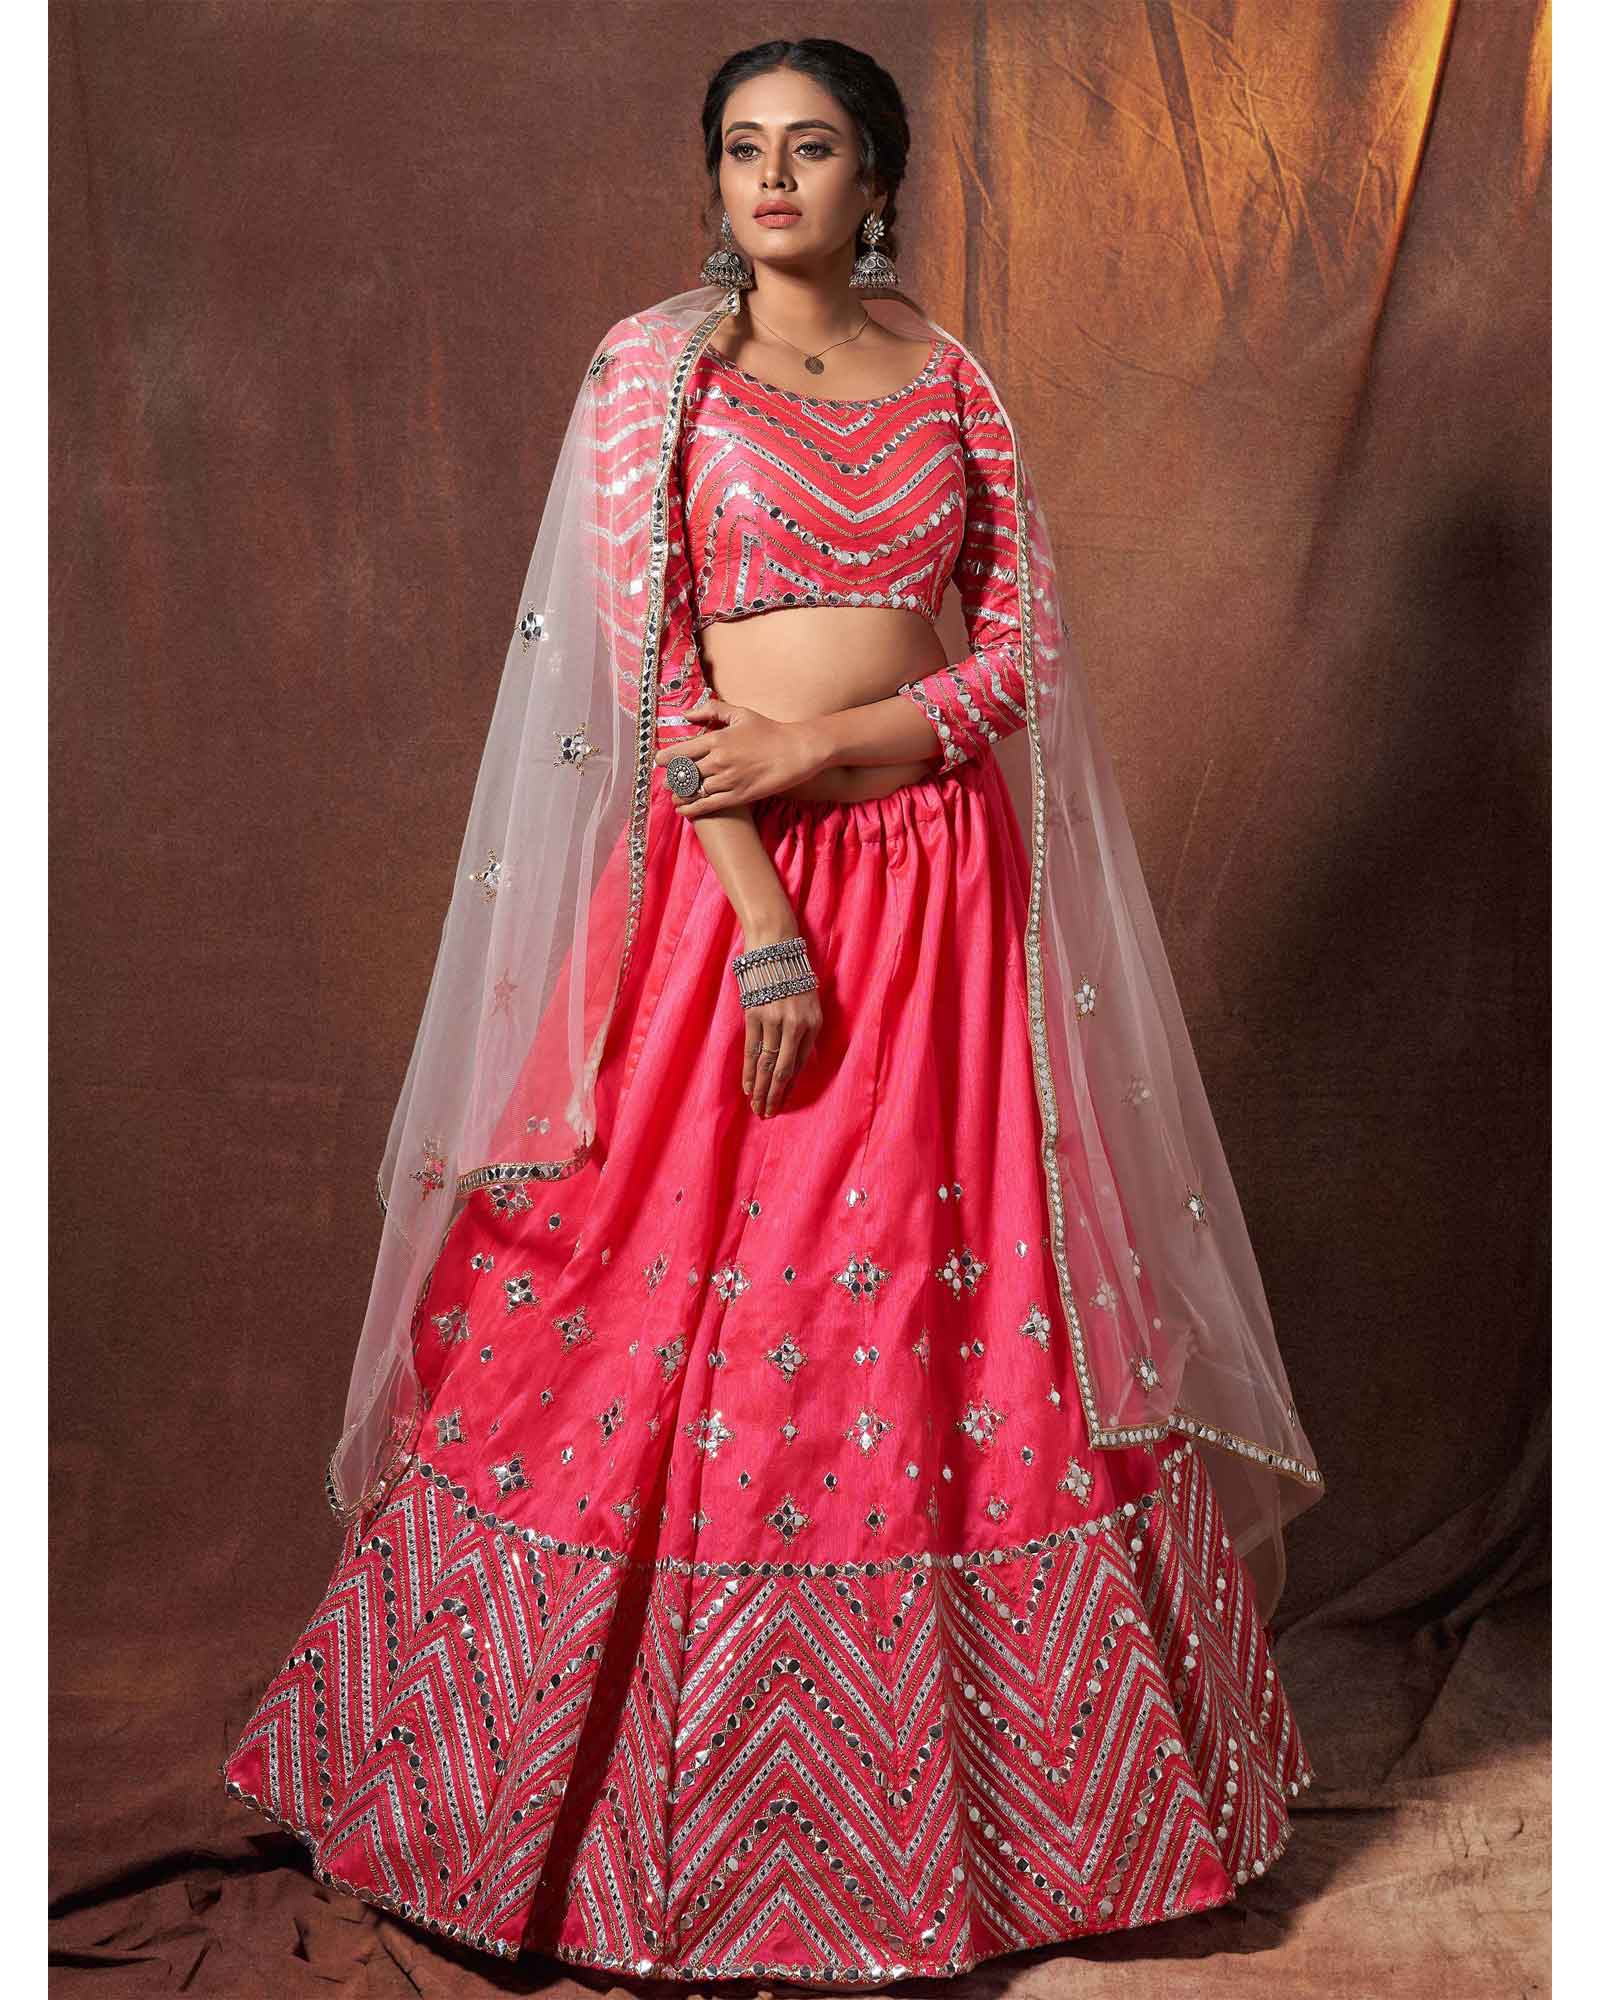 Neon Pink Lehenga with White Dupatta – Mohi fashion